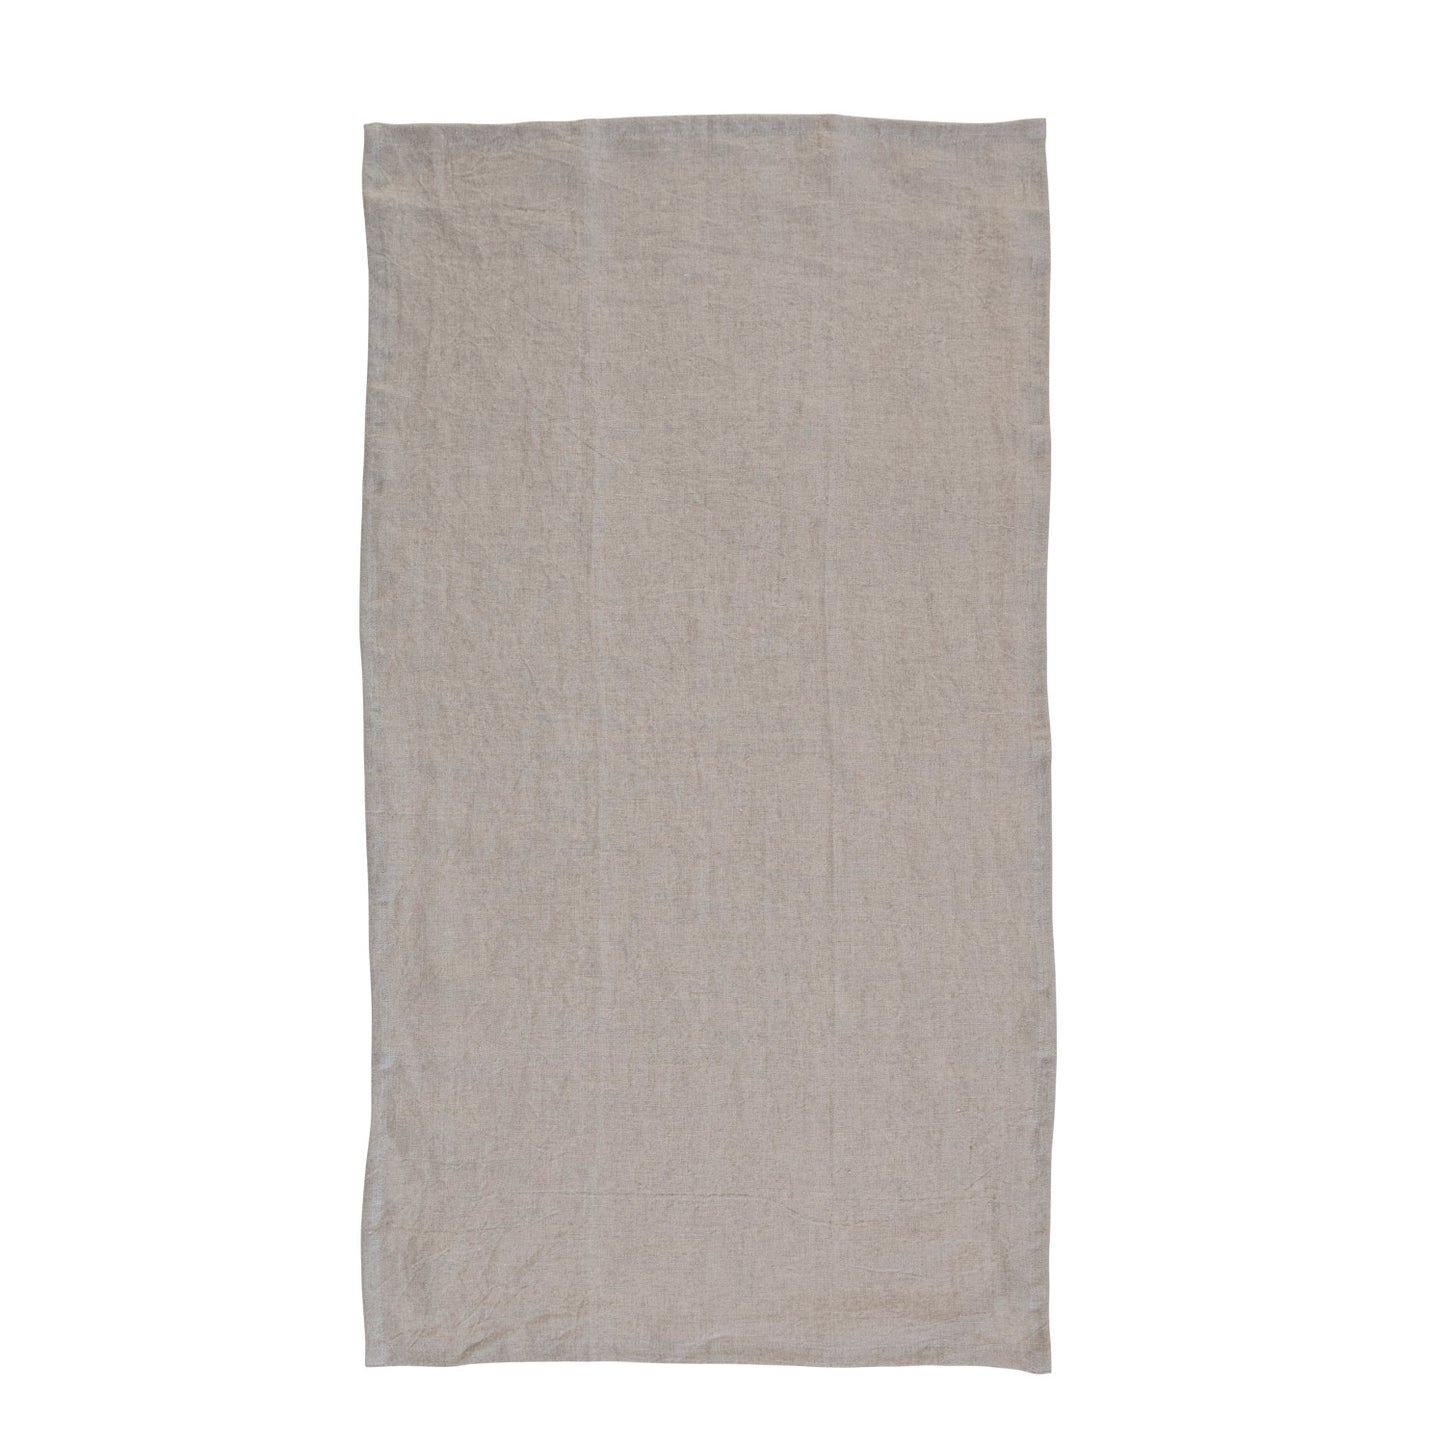 28"L x 18"W Stonewashed Linen Tea Towel